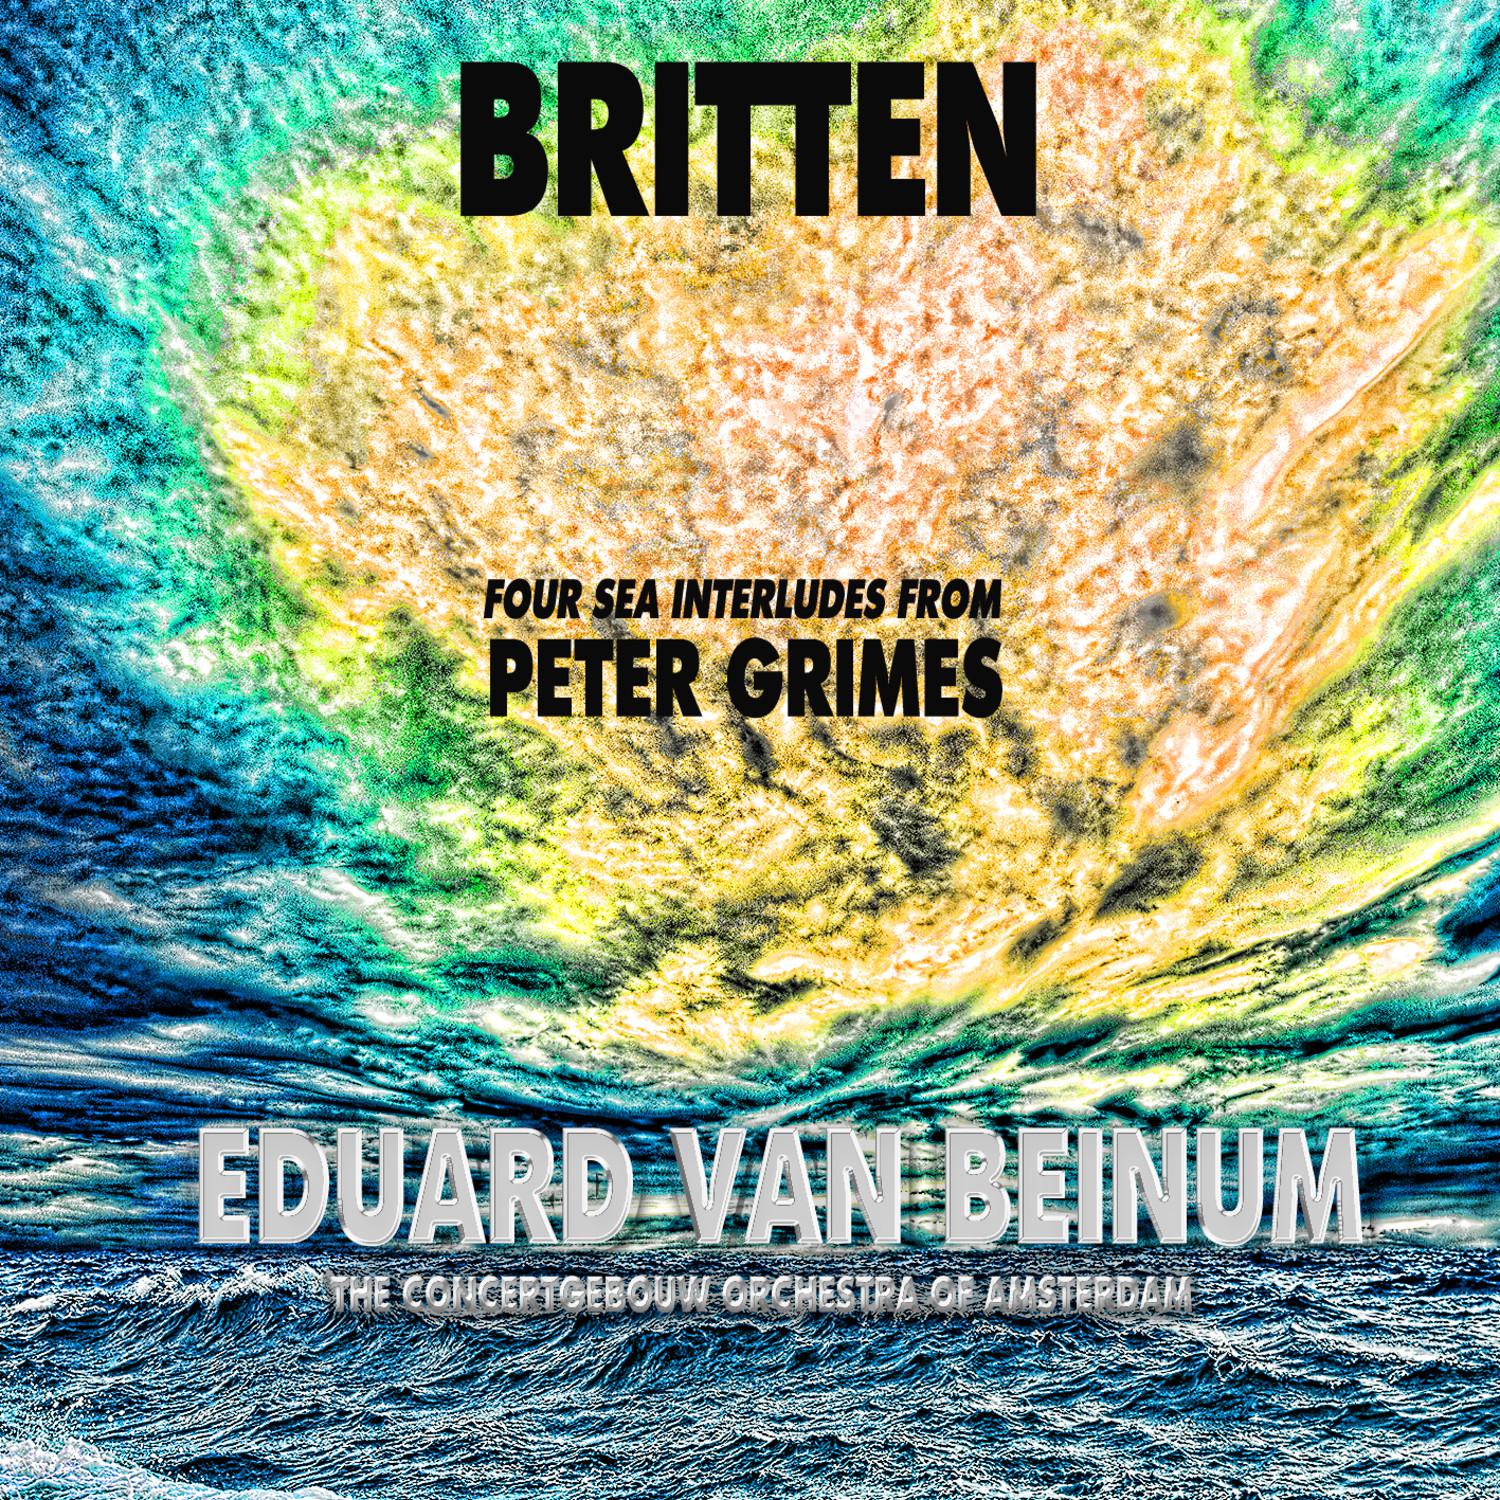 Peter Grimes: "Storm"